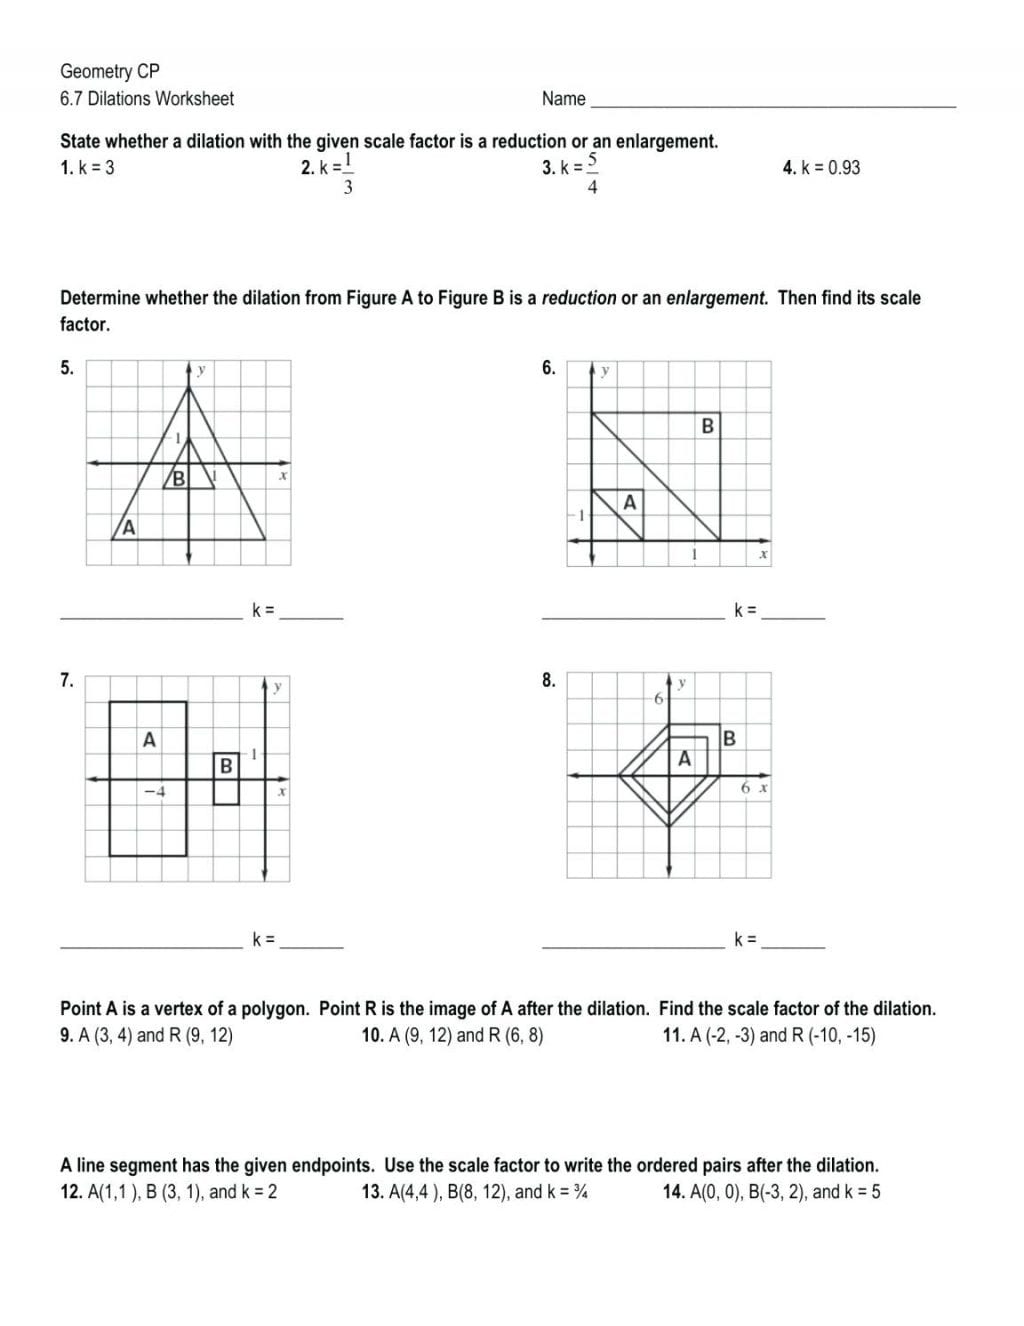 Dilations Math 2 Worksheet Answers